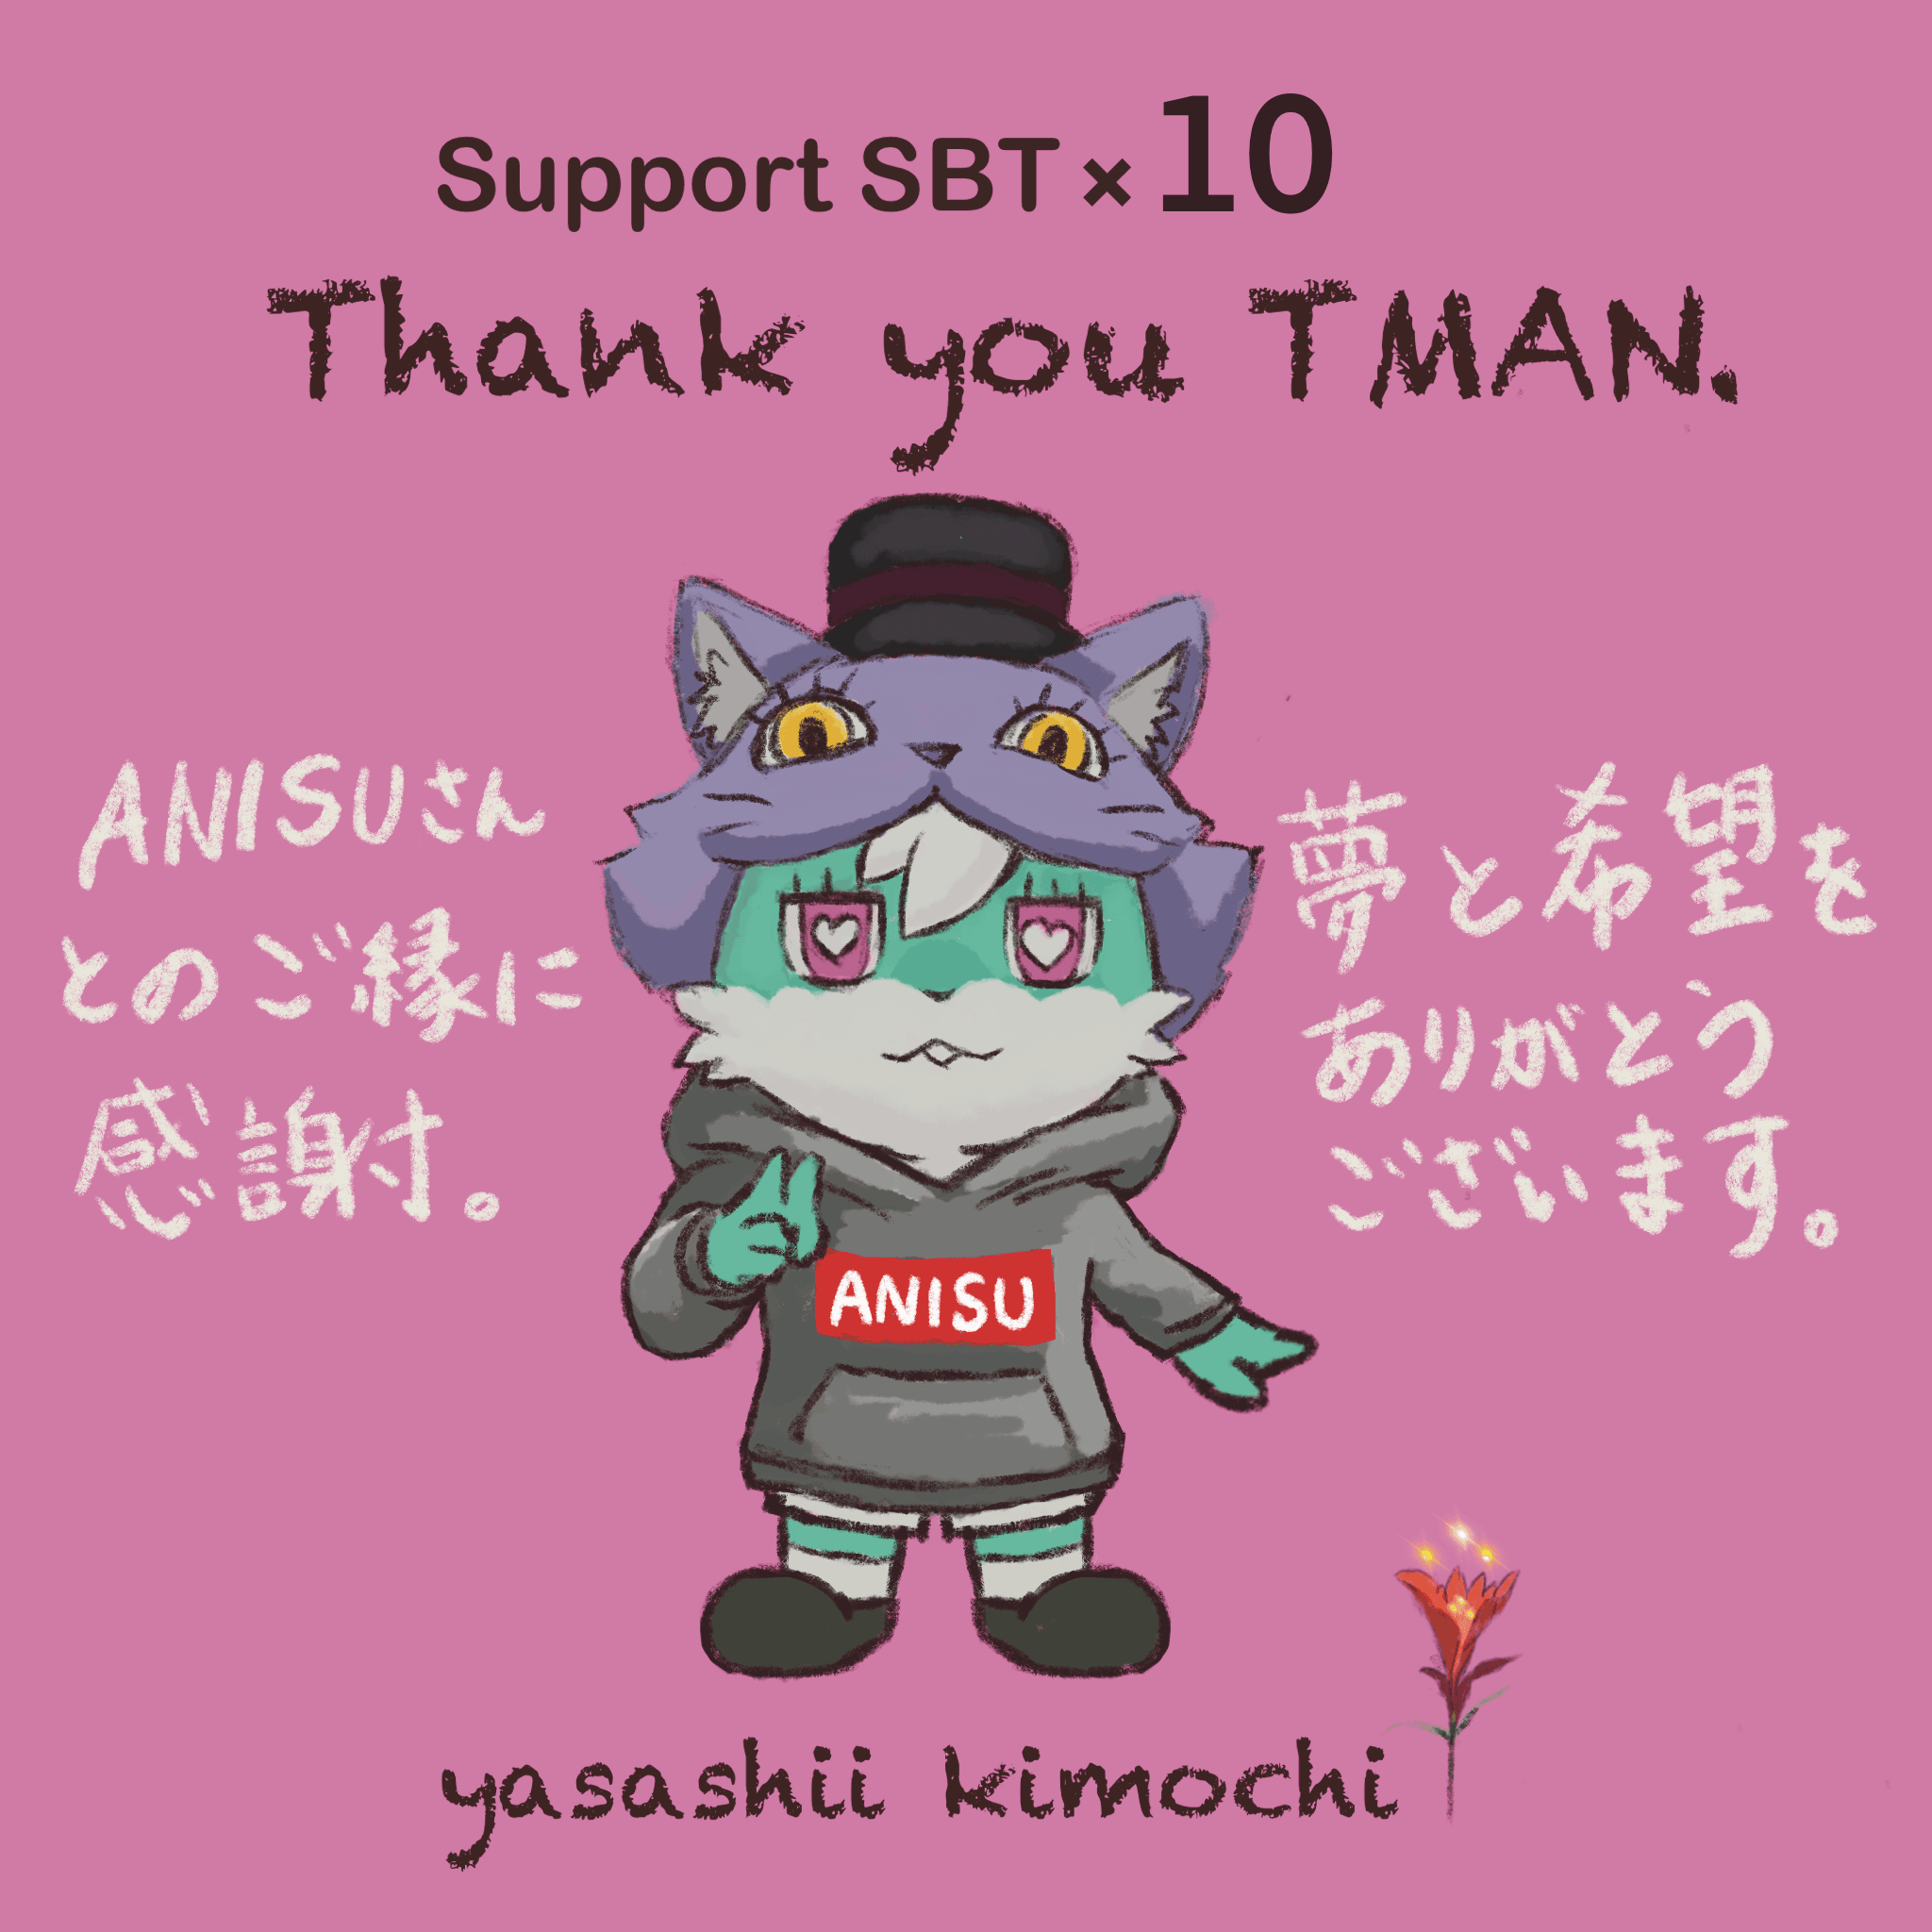 Thank you ANISU-san